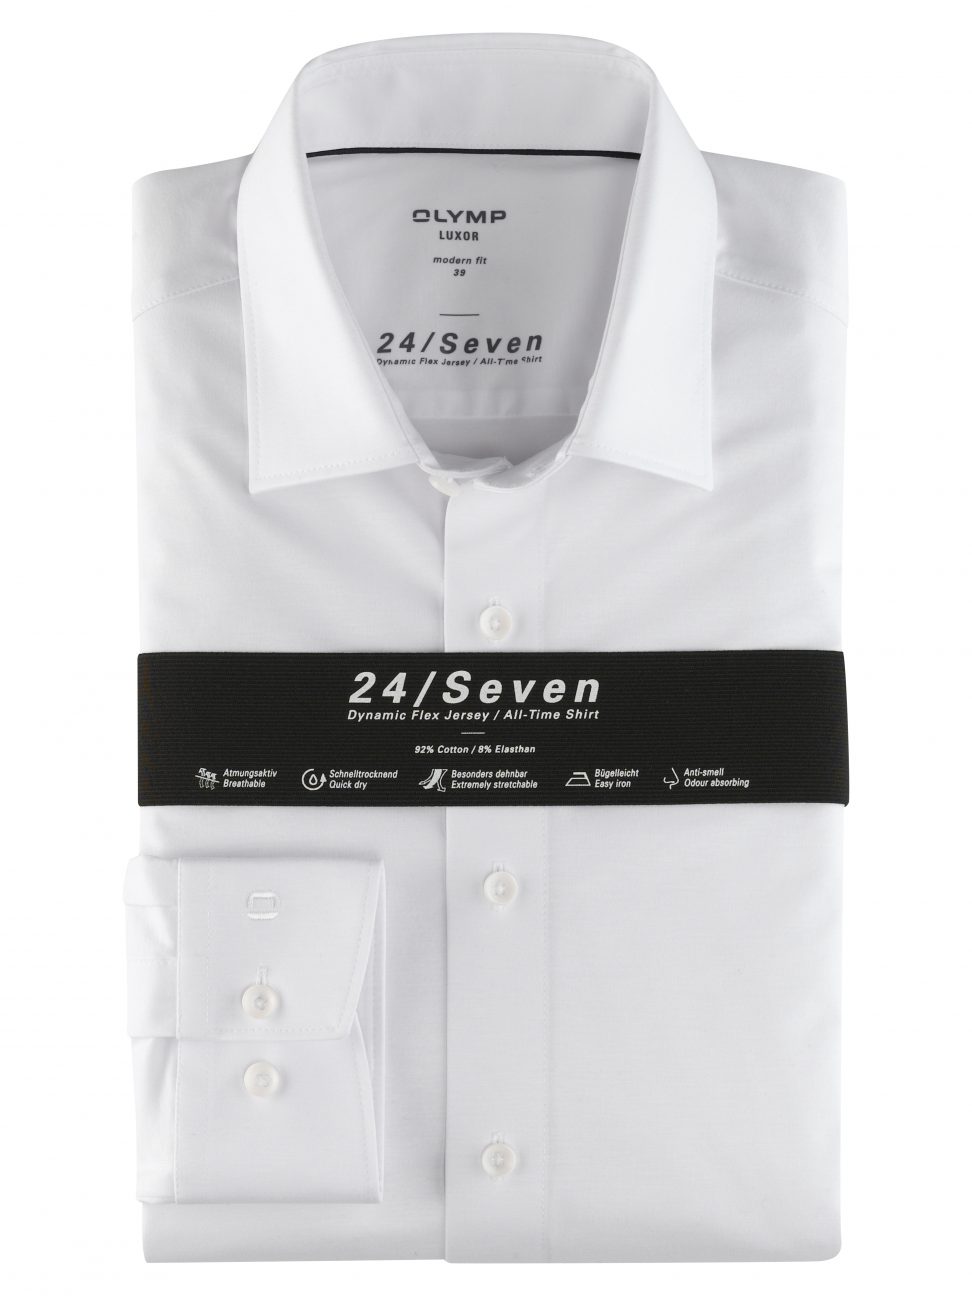 Koszula OLYMP Luxor 24/Seven modern fit, Business shirt, New Kent, White /12026400